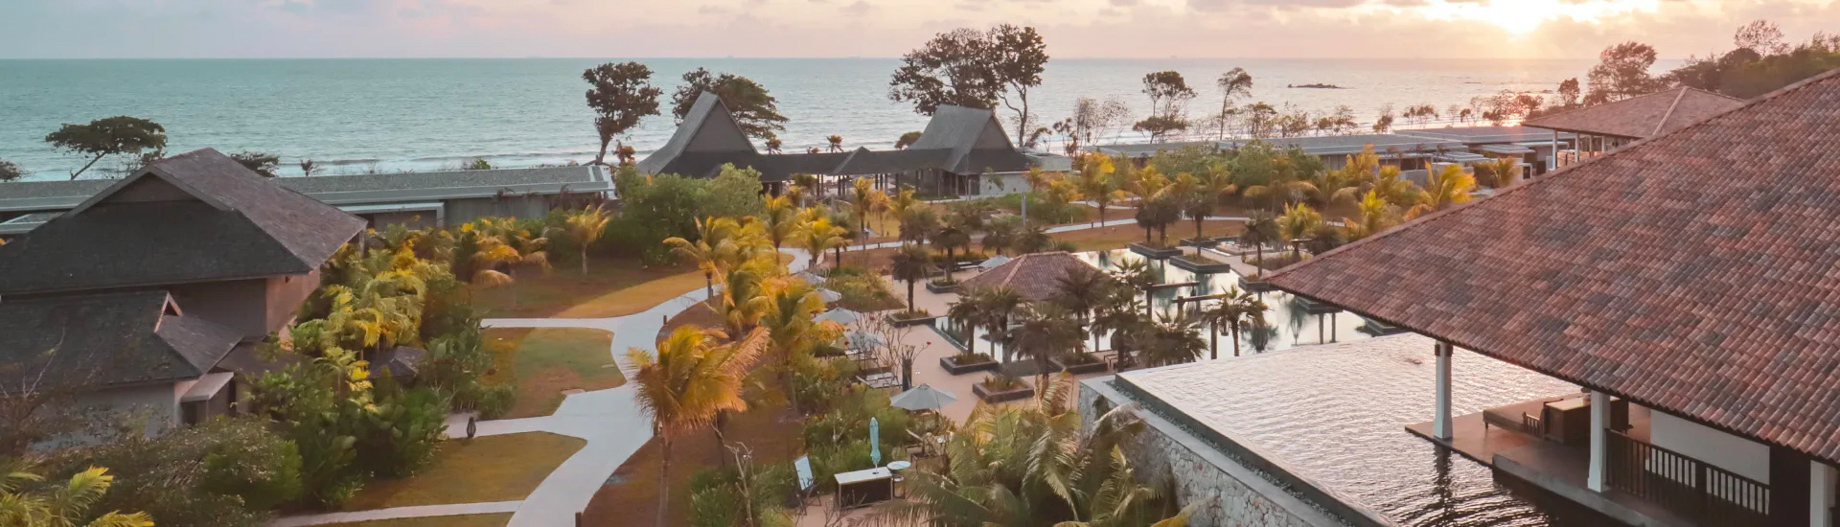 Anantara Desaru Coast Resort & Villas – Johor, Malaysia – Ocean View Sunset